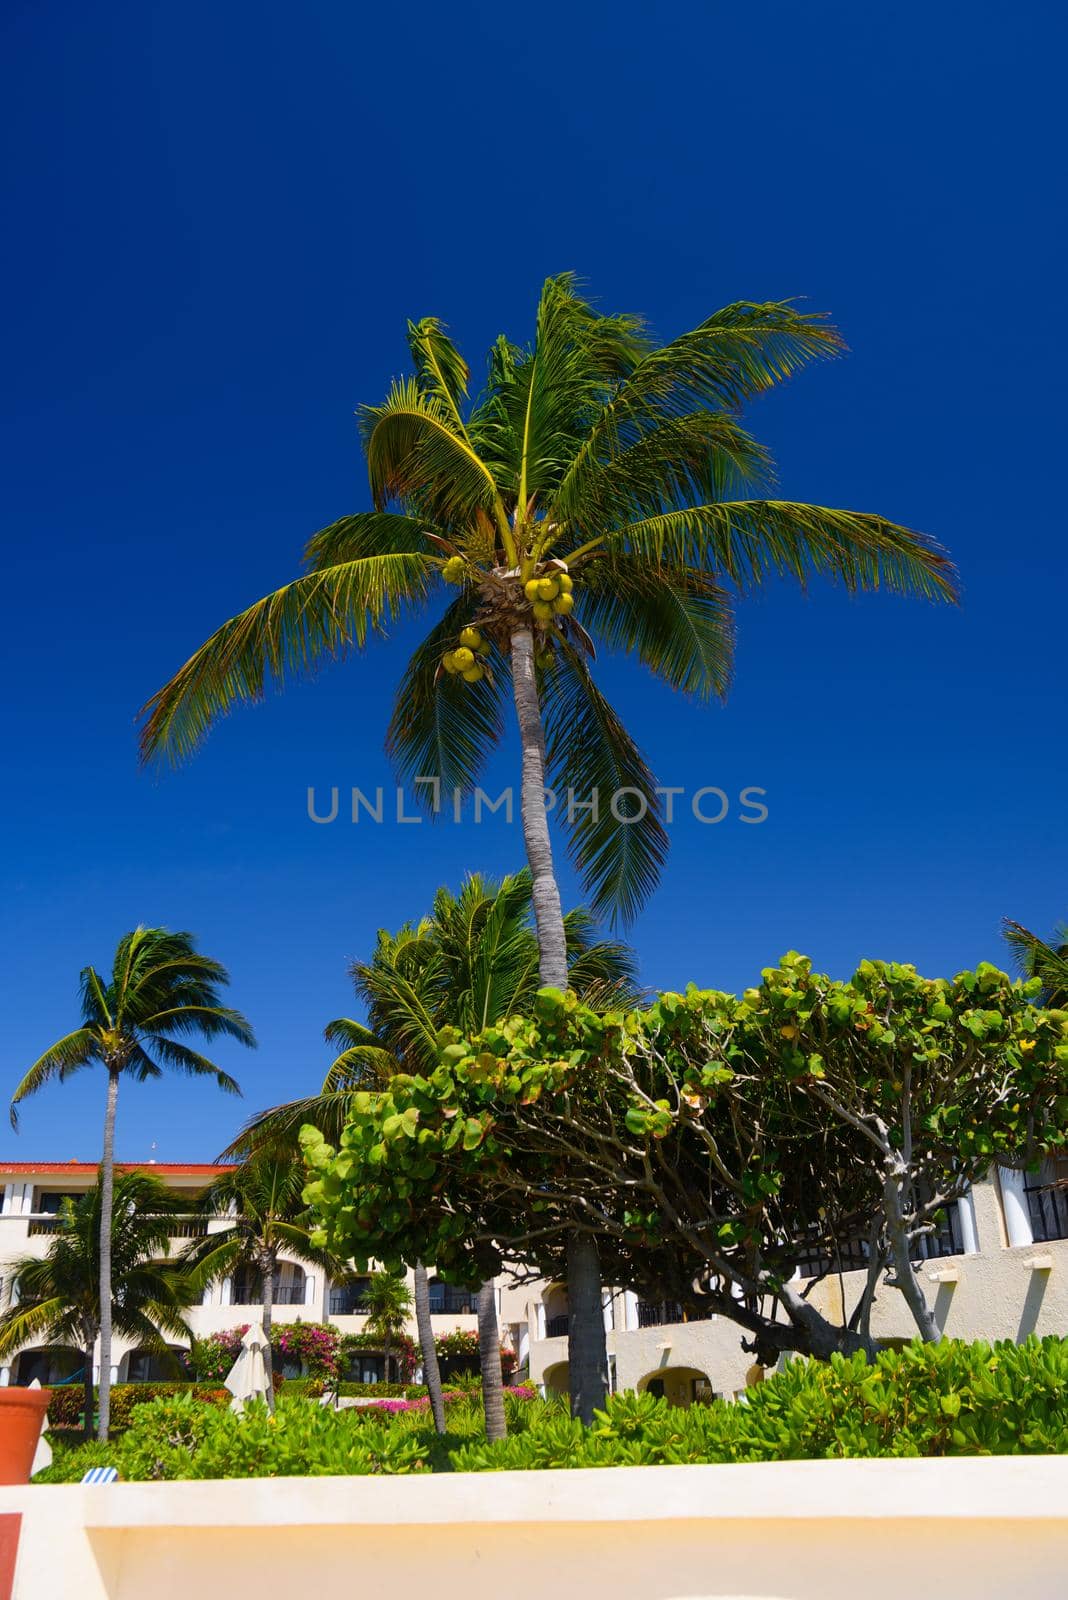 Cocos palm with cocos nuts in Playa del Carmen, Mexico by Eagle2308